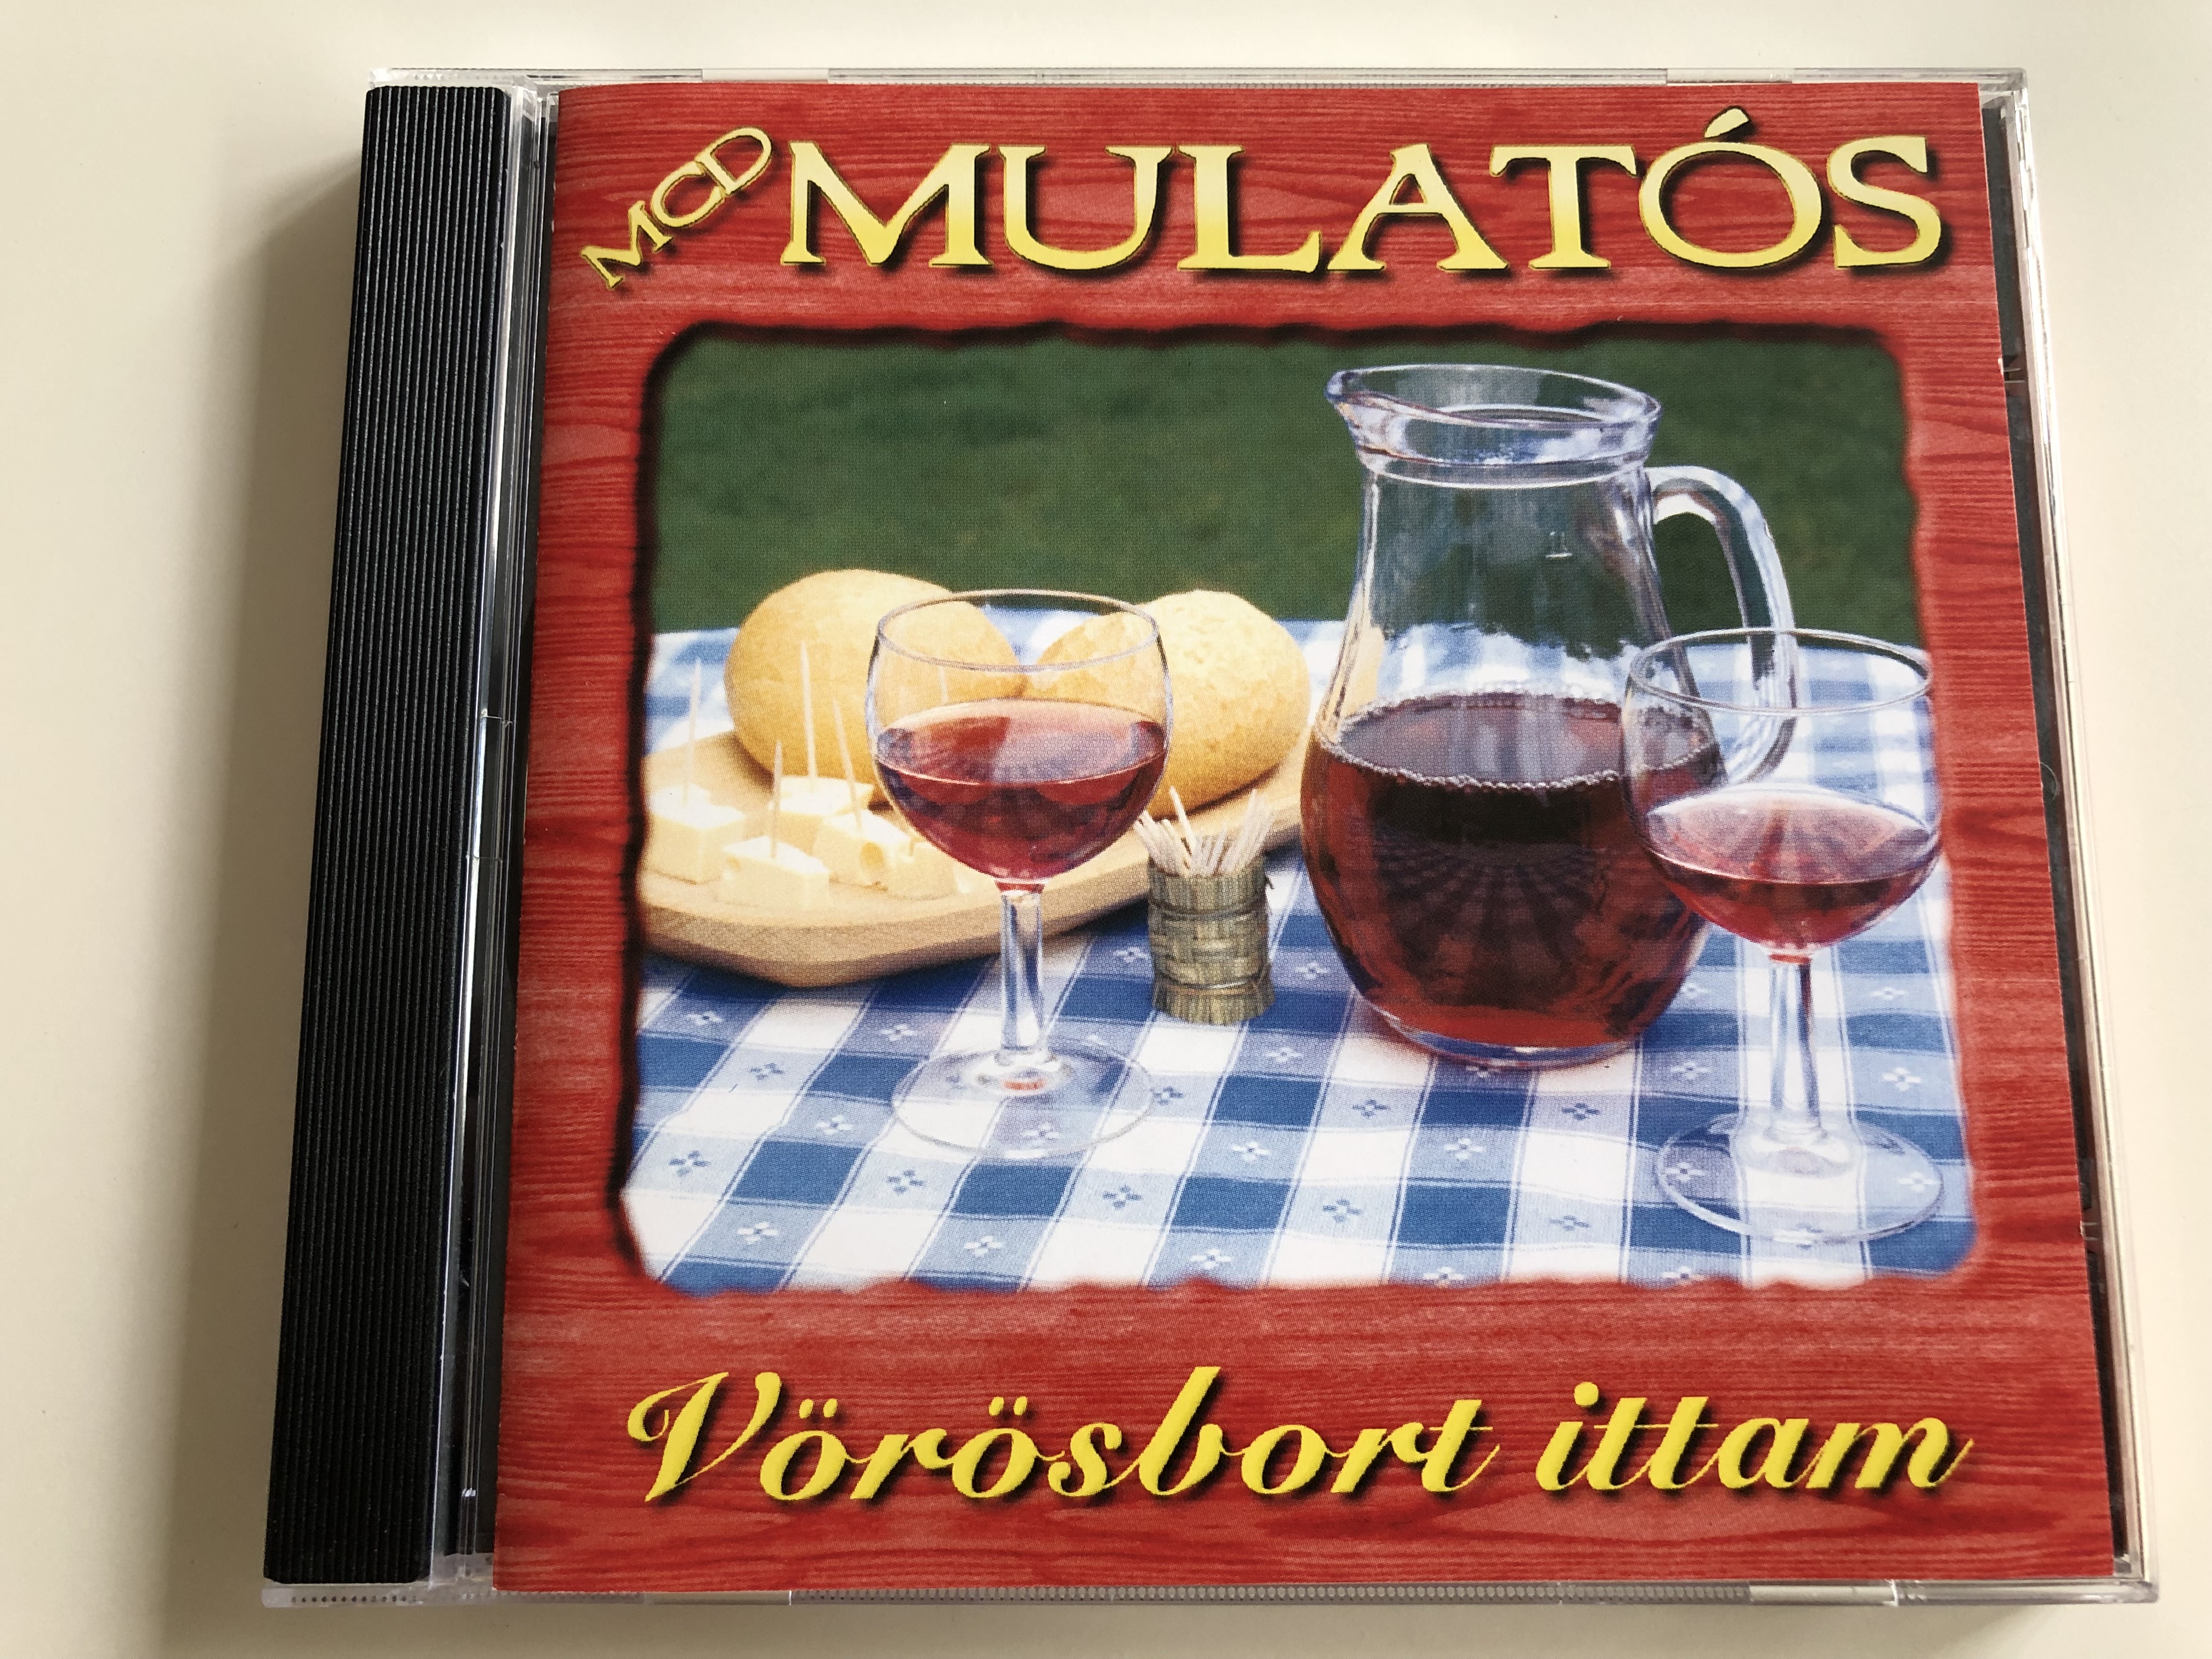 mulat-s-v-r-bort-ittam-sej-ha-ak-cfa-macskajaj-cikk-cak-s-rgul-m-r-a-kukorica-sz-r-audio-cd-2005-musicdome-0322-mcd-1-.jpg